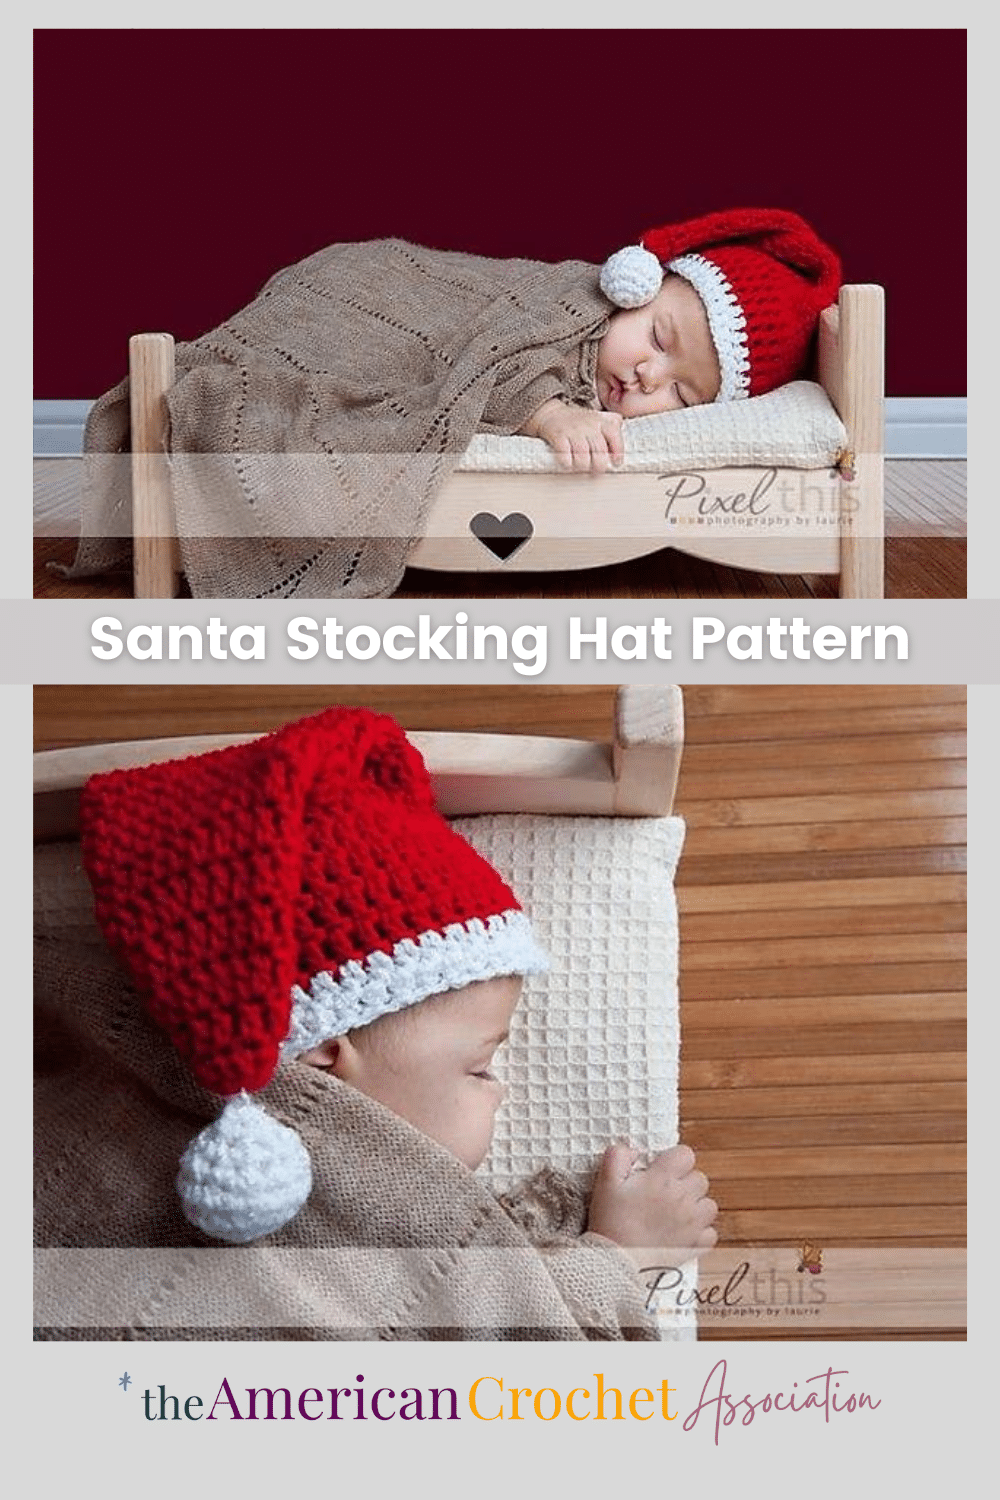 Crochet Santa Stocking Hat on Sleeping Baby